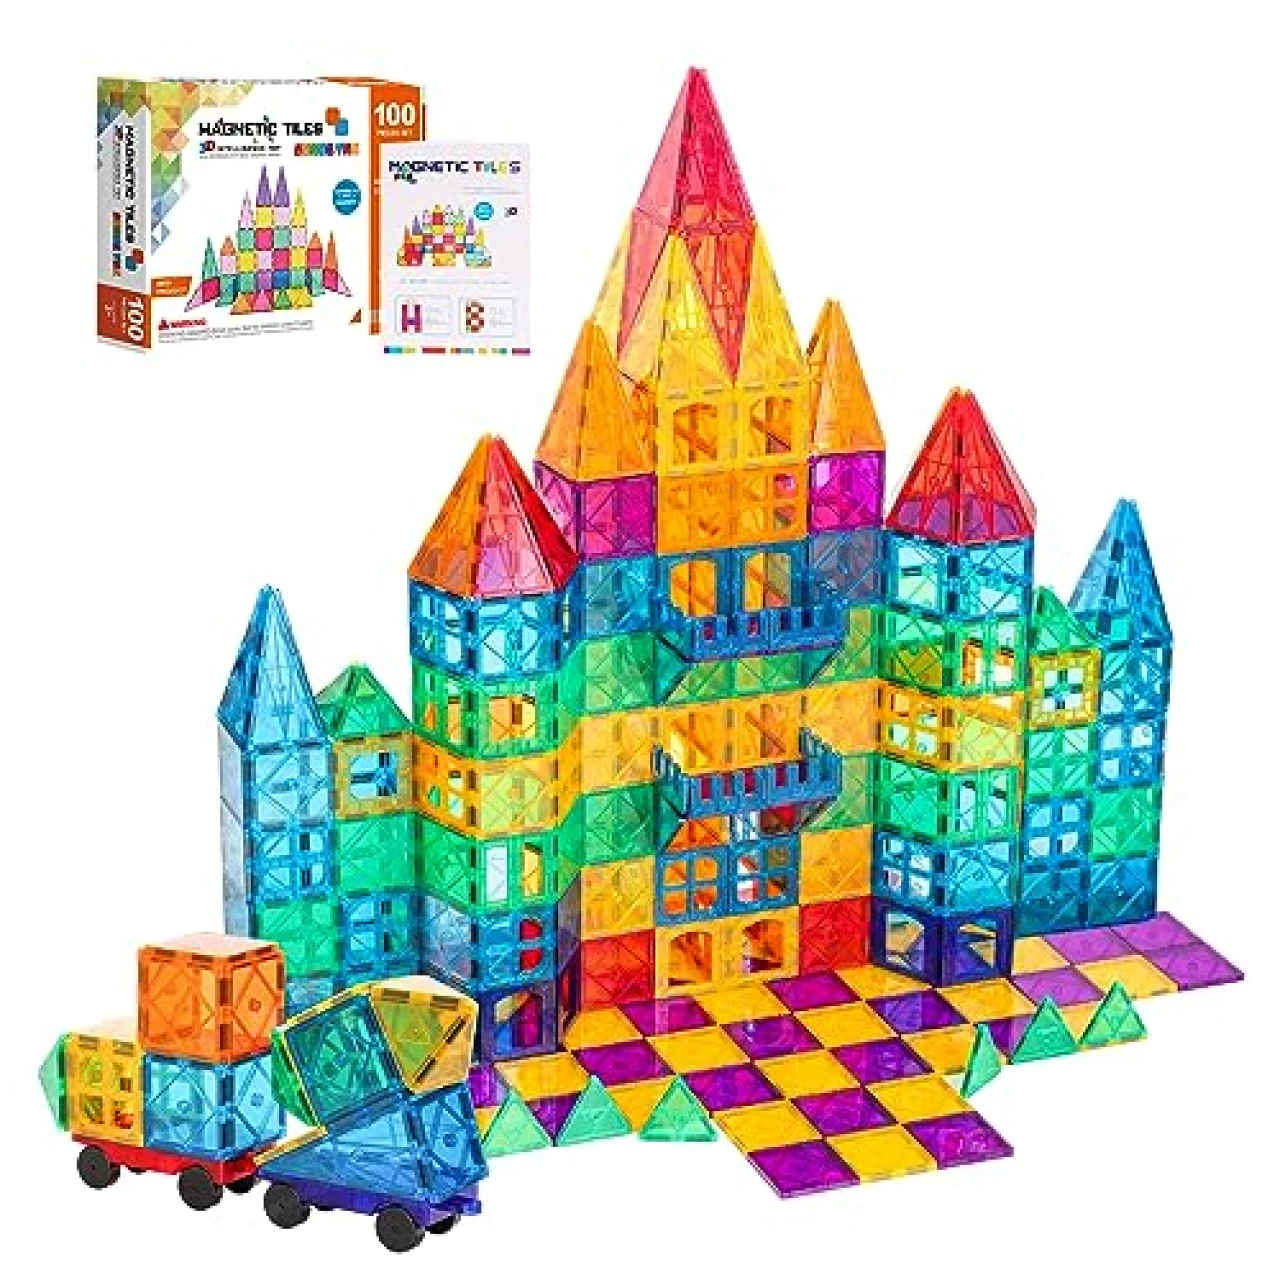 SUNHE YHK Kids Magnetic Tiles Toys, 100Pcs 3D Magnetic Building Blocks Tiles Set